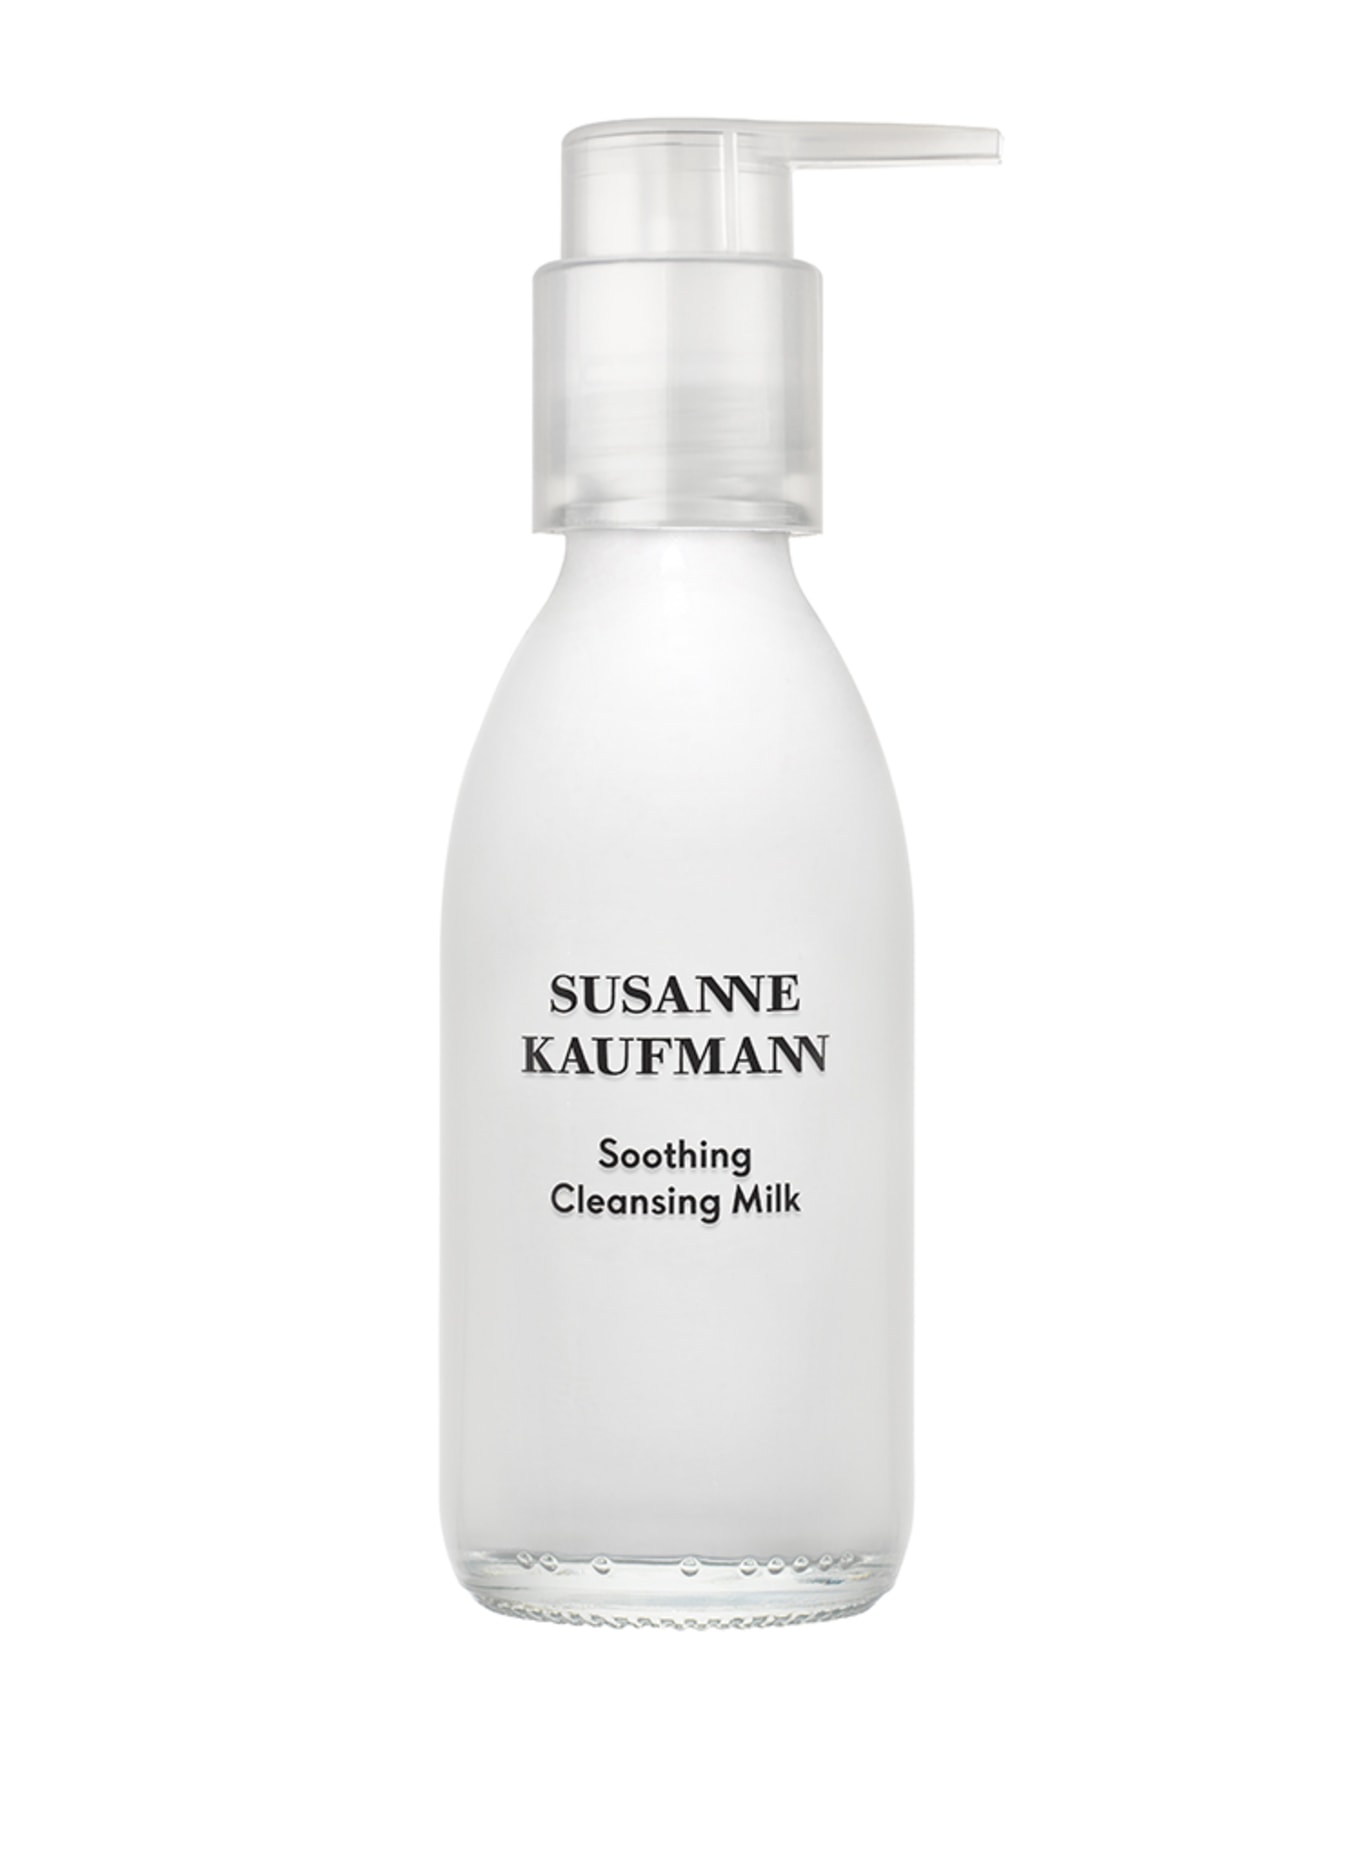 SUSANNE KAUFMANN SOOTHING CLEANSING MILK  (Obrázek 1)